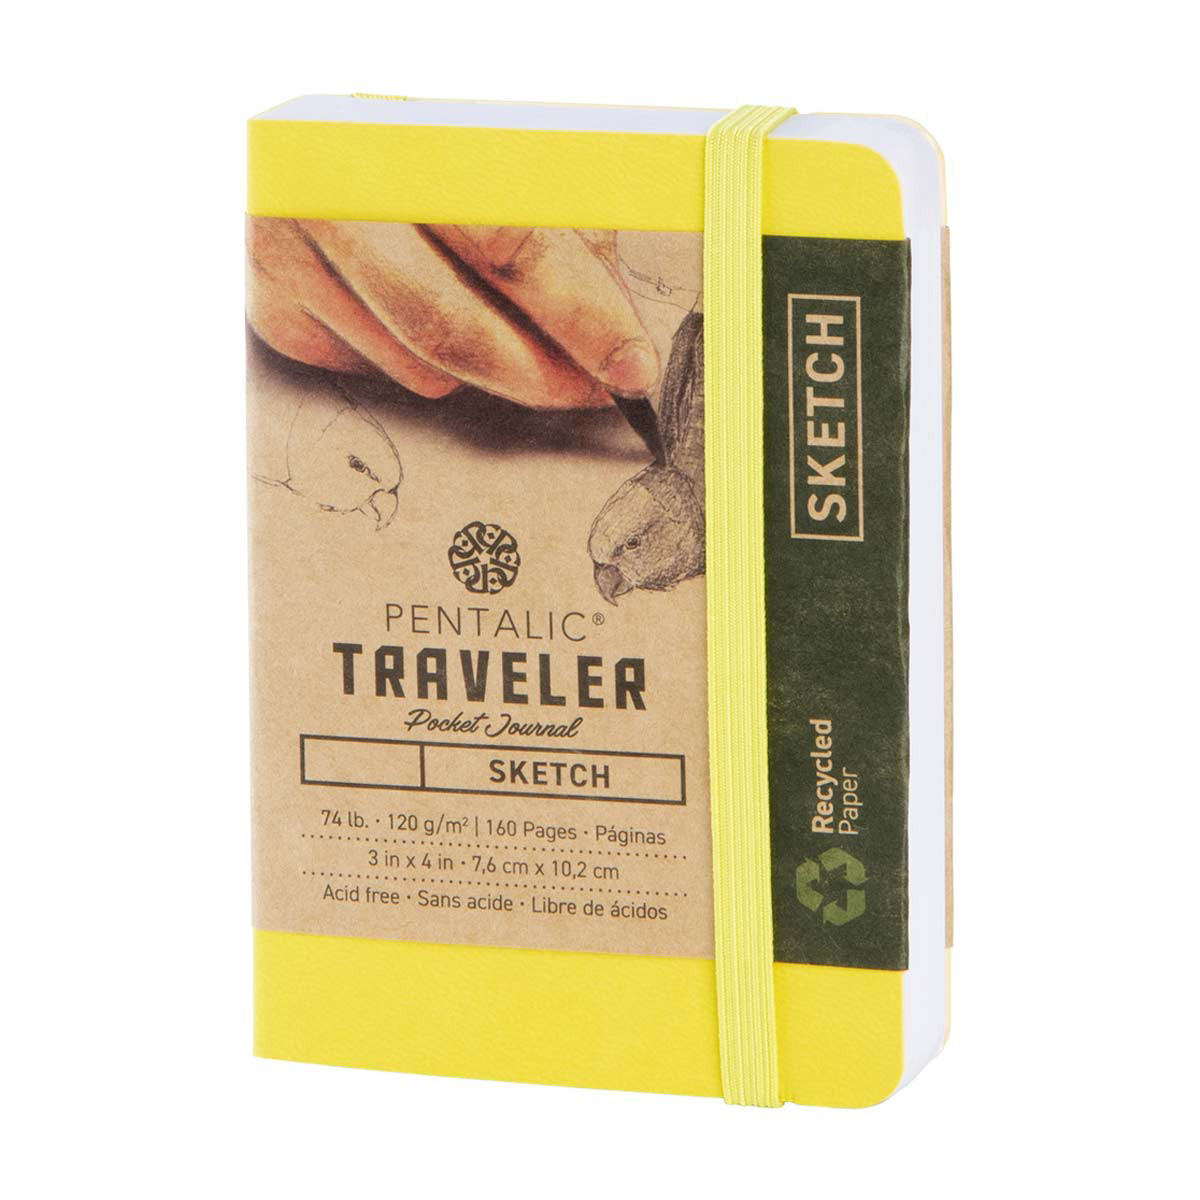 Pentalic 3 x 4 Sketch Traveler Pocket Journal, Citrine Yellow